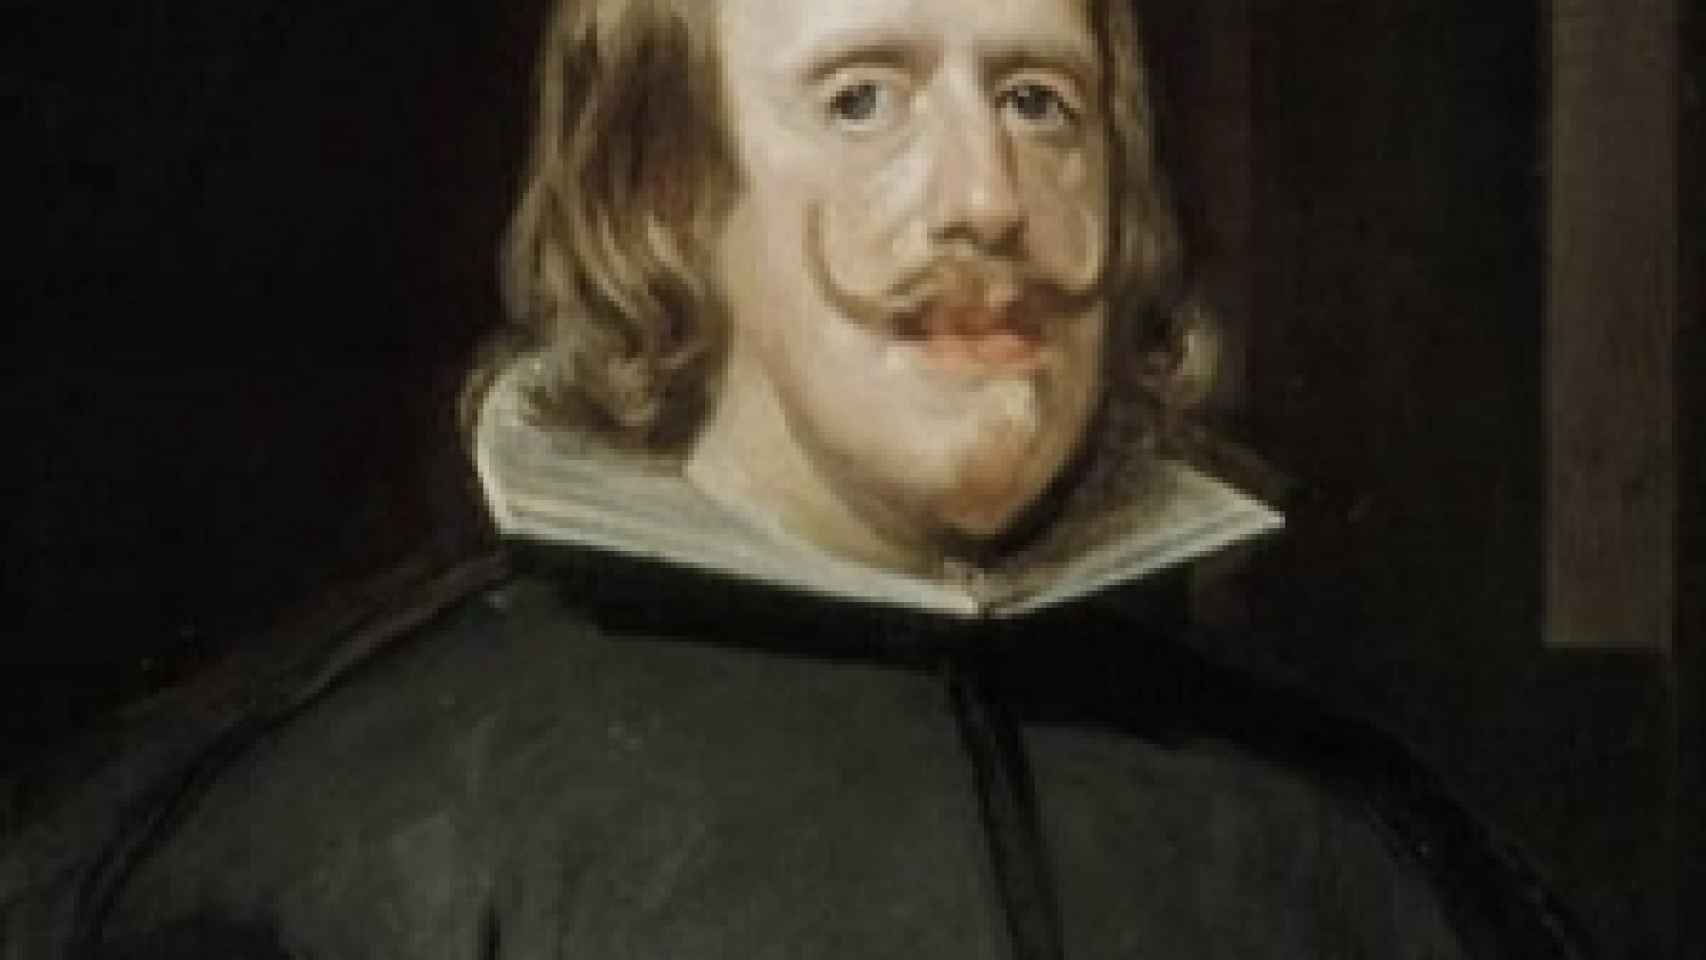 Image: Velázquez, retratista de la corte